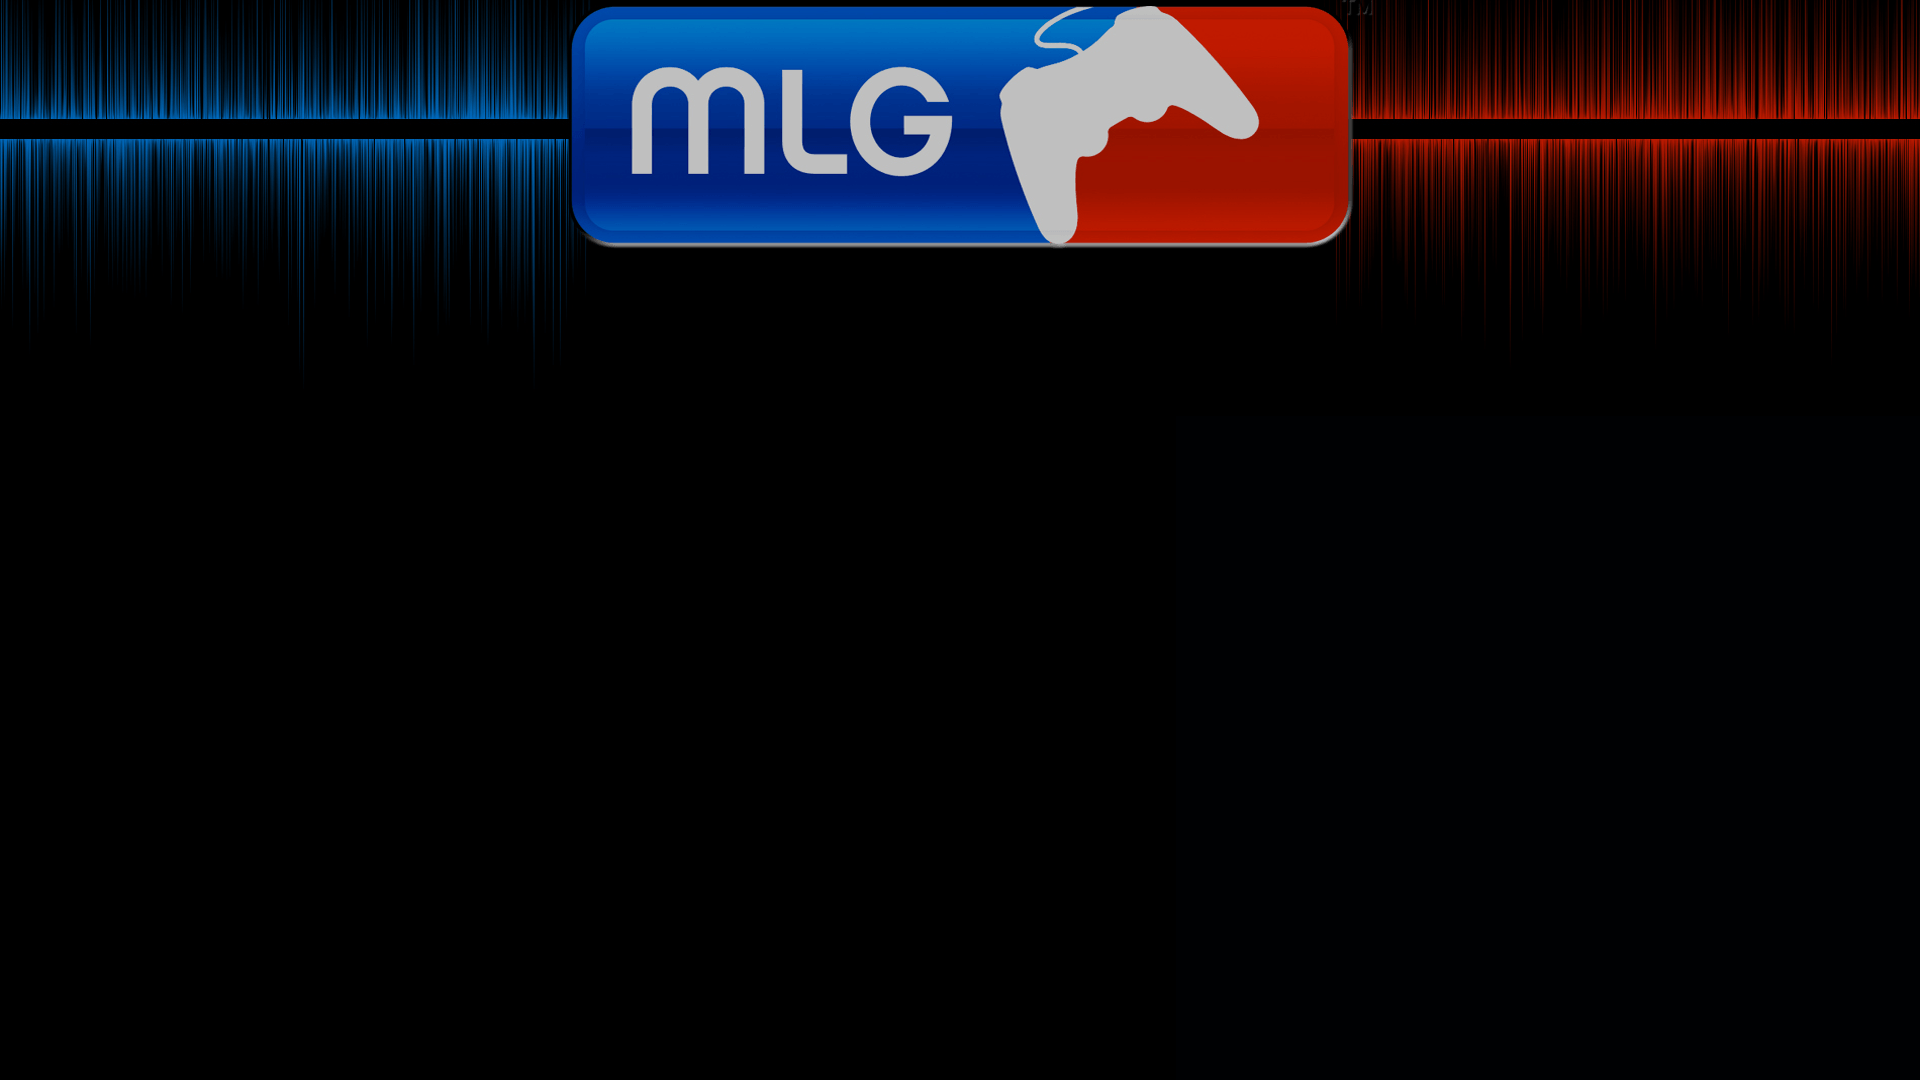 HD Major League Gaming Wallpaper HD Wallpaper